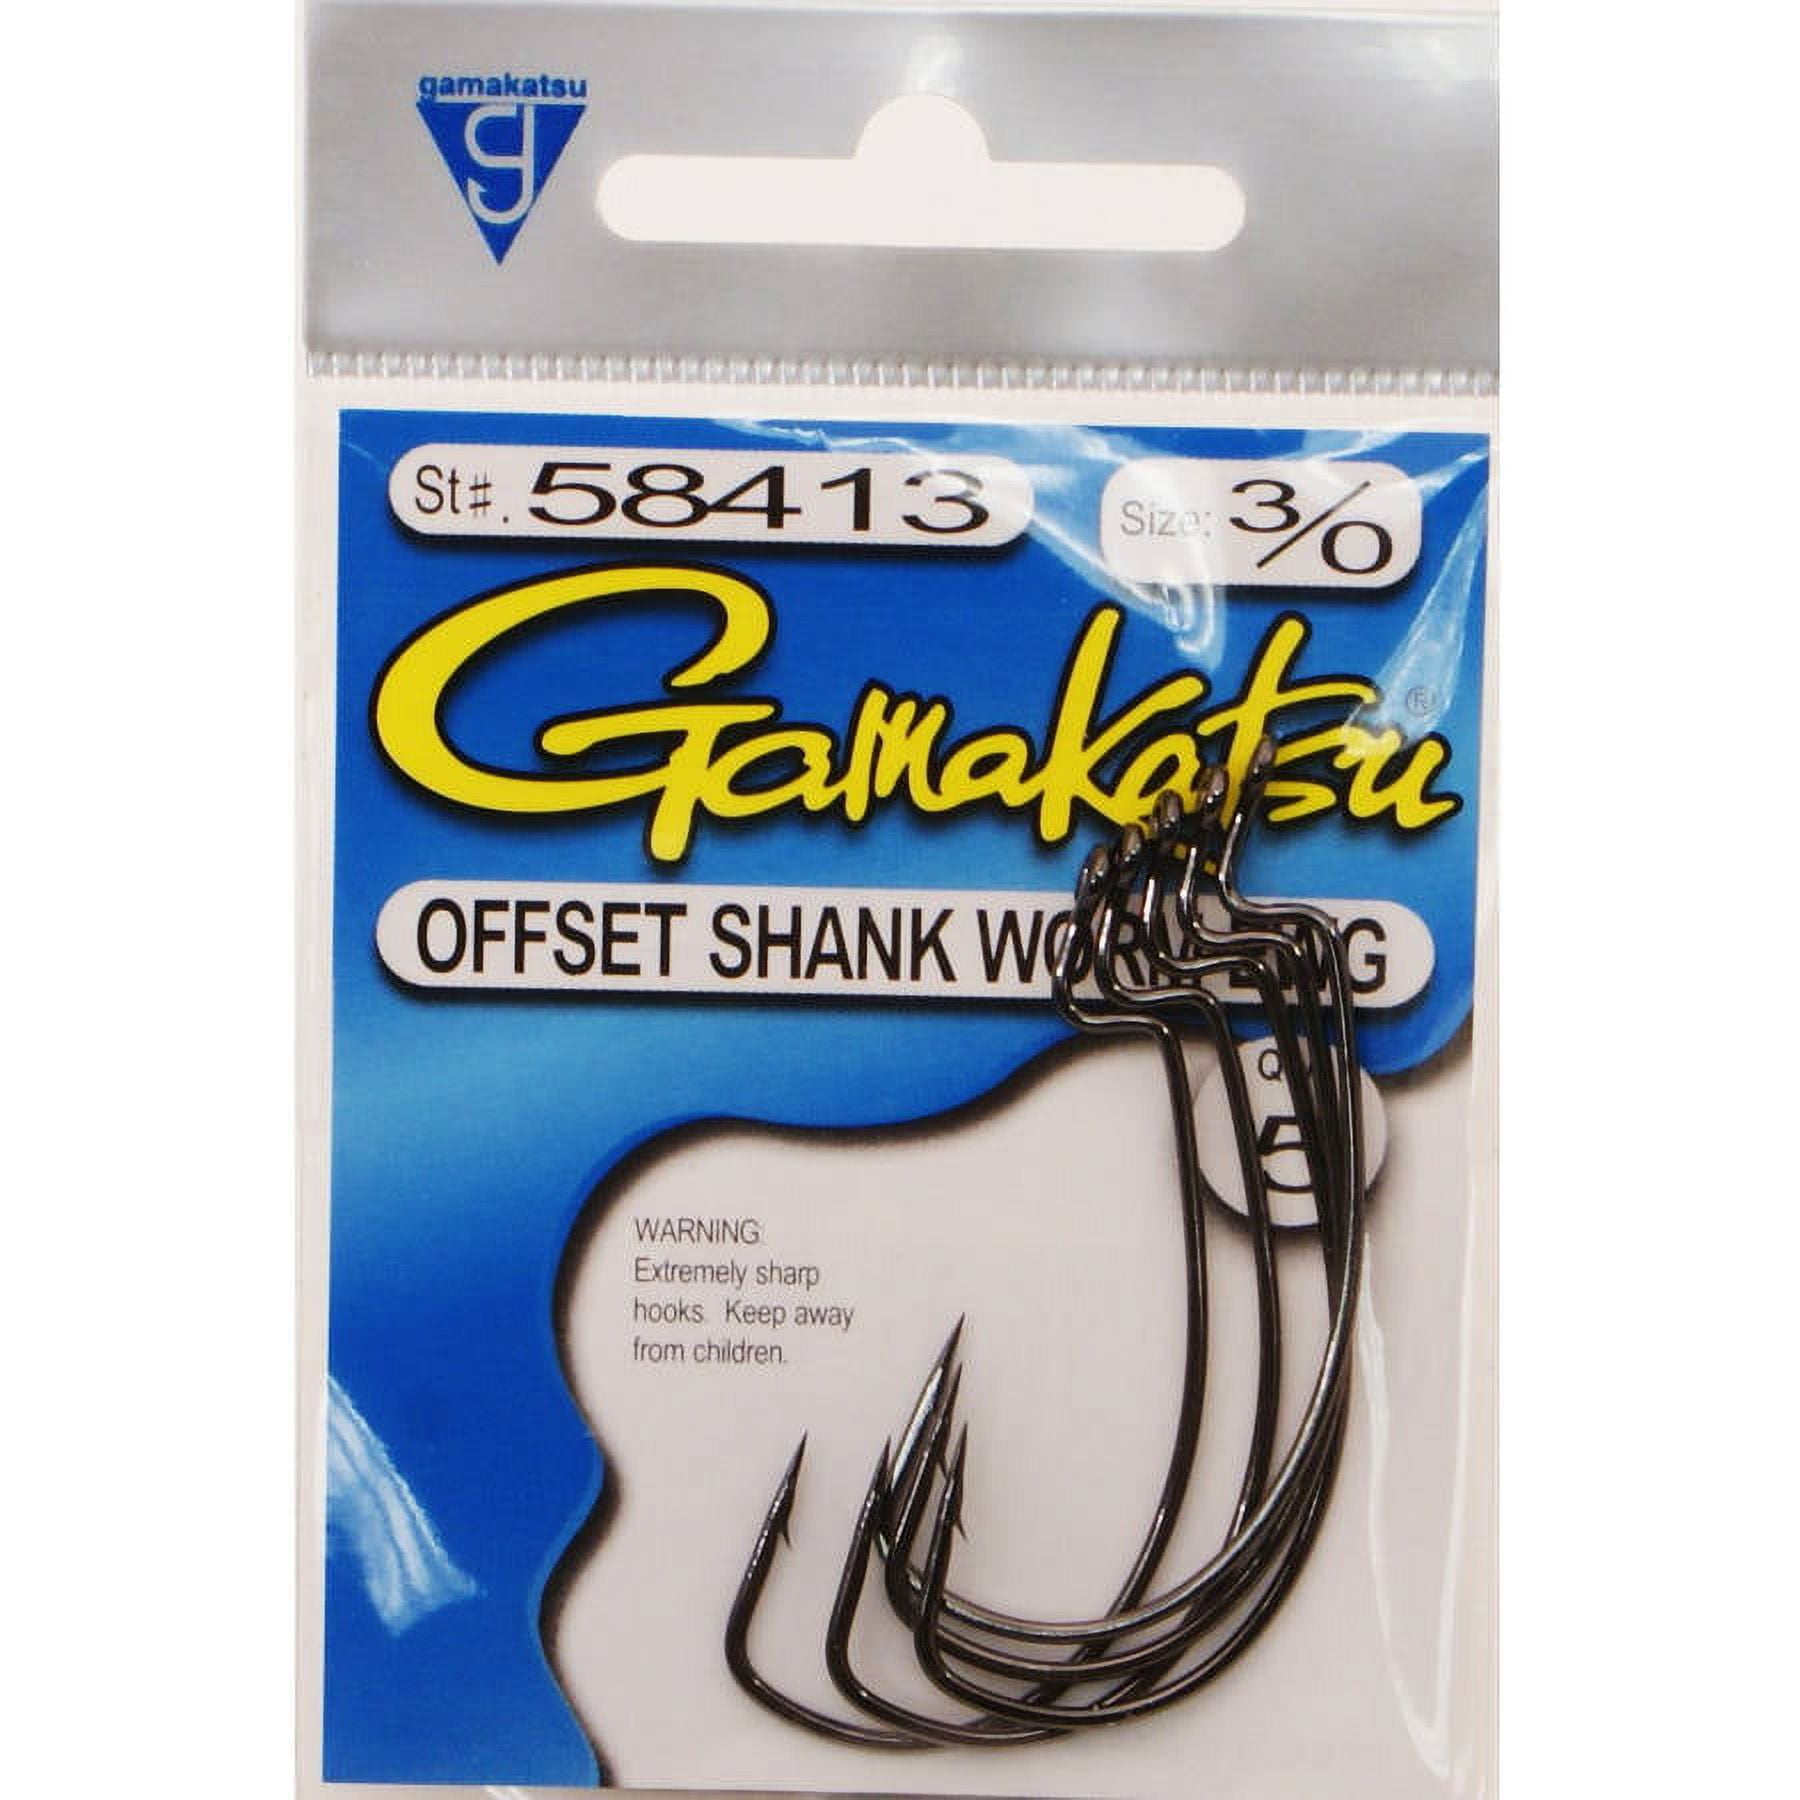 Gamakatsu Extra Wide Gap Offset Shank Worm Hooks, Size 3/0 Blk (5 Pack) 